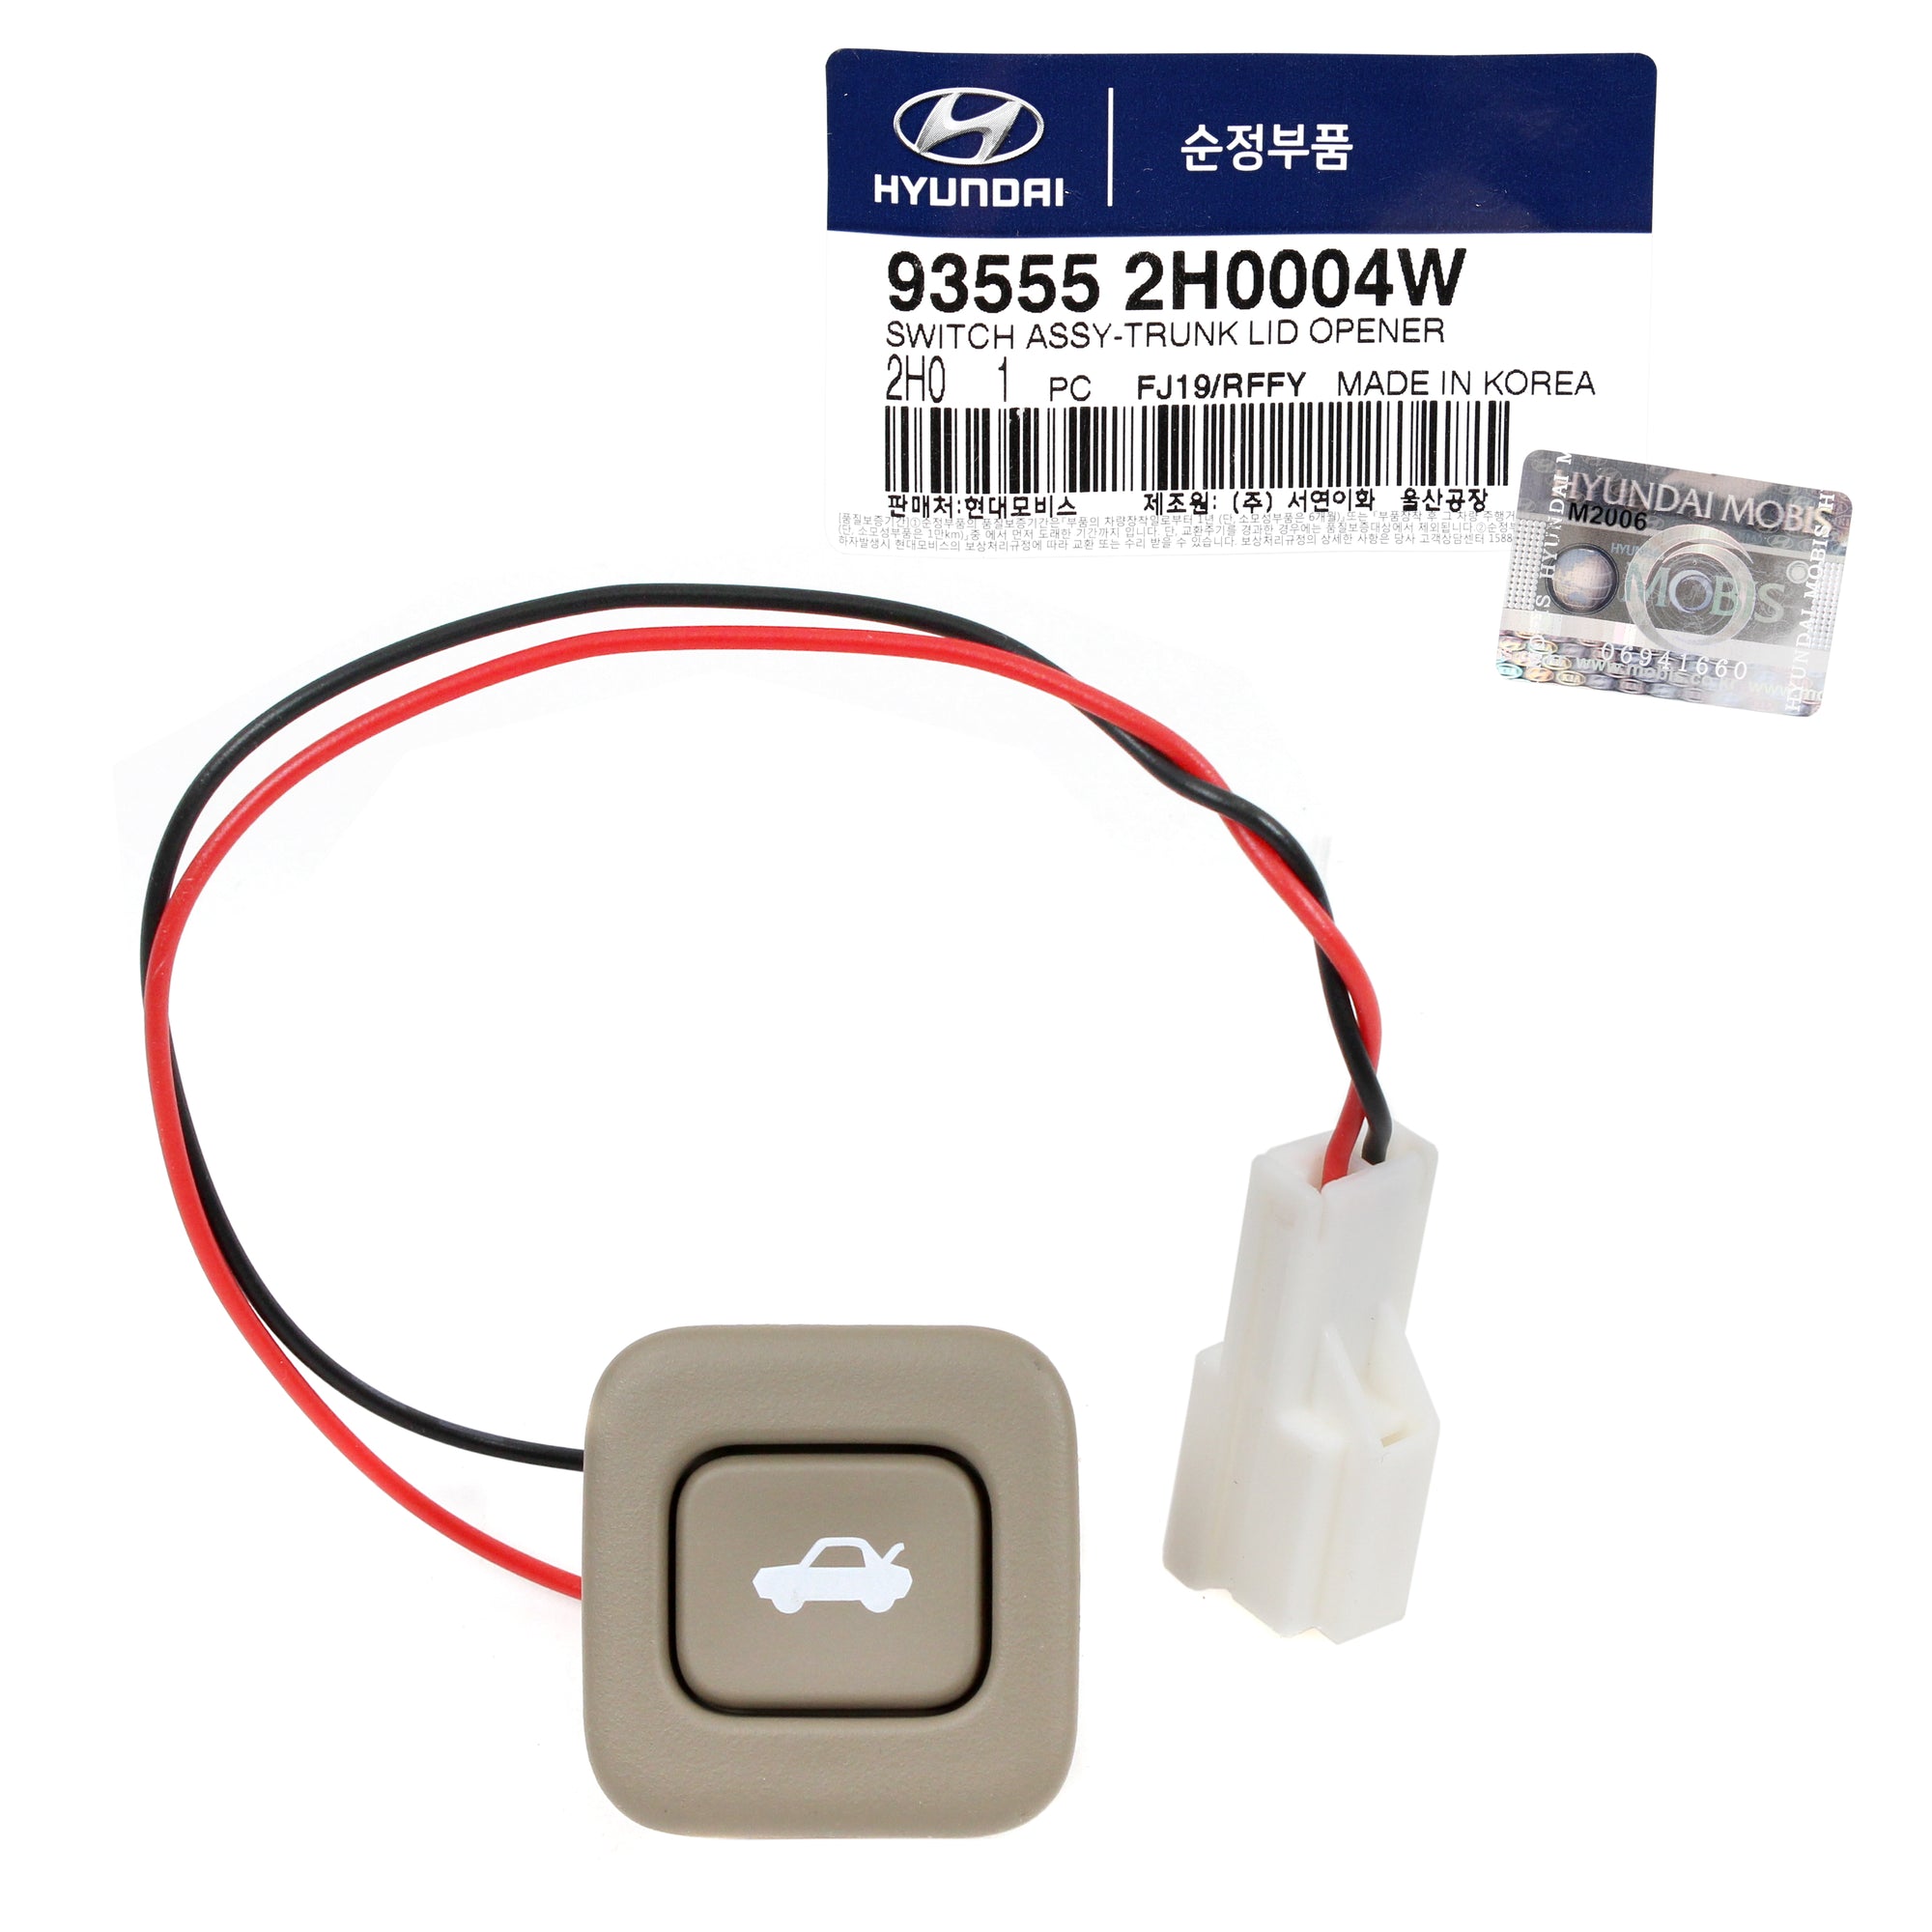 GENUINE Trunk Lid Opener Switch for 07-10 Hyundai Elantra SEDAN 935552H0004W